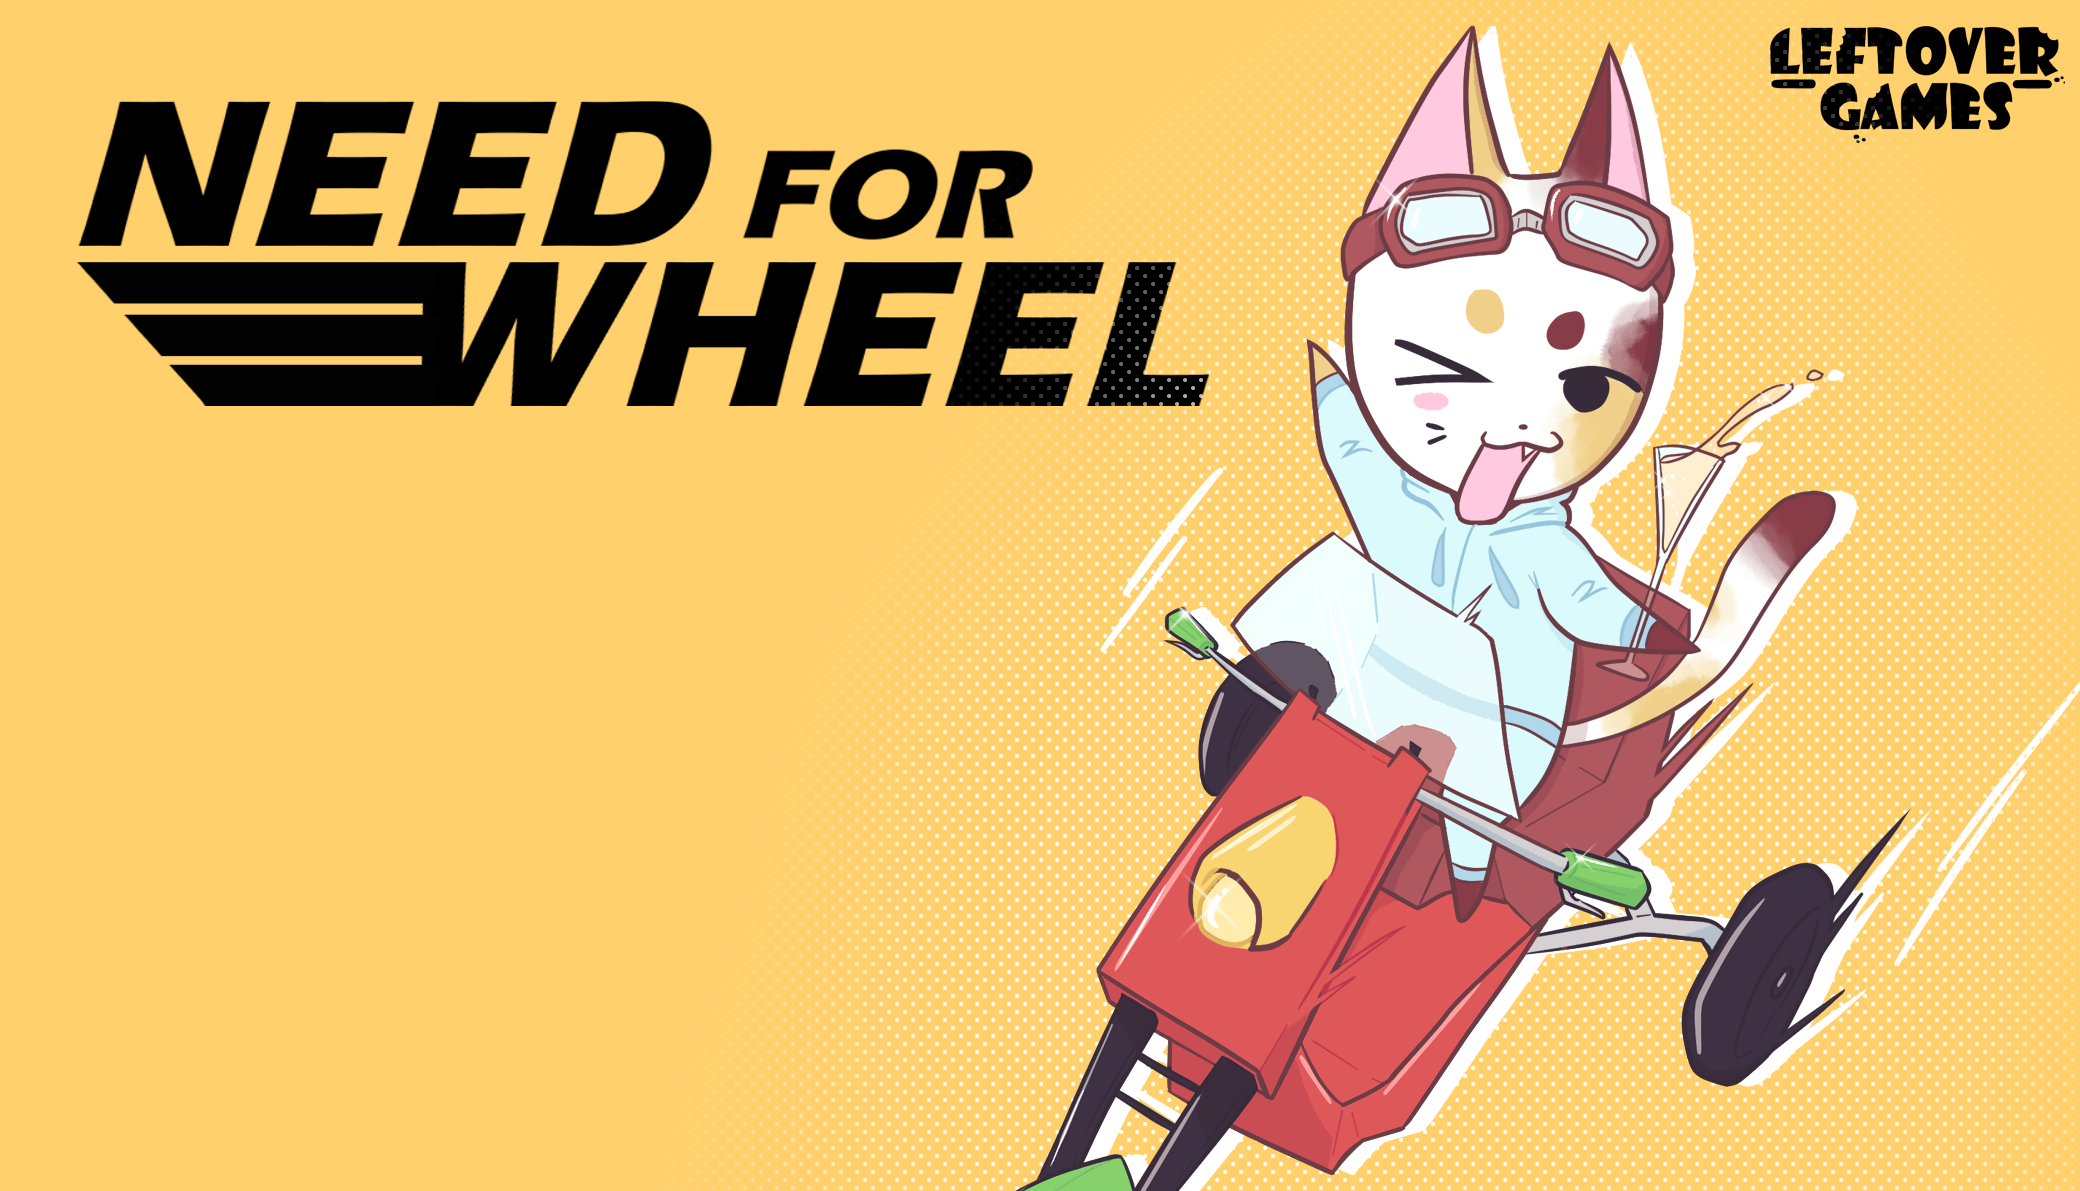 Need for wheel